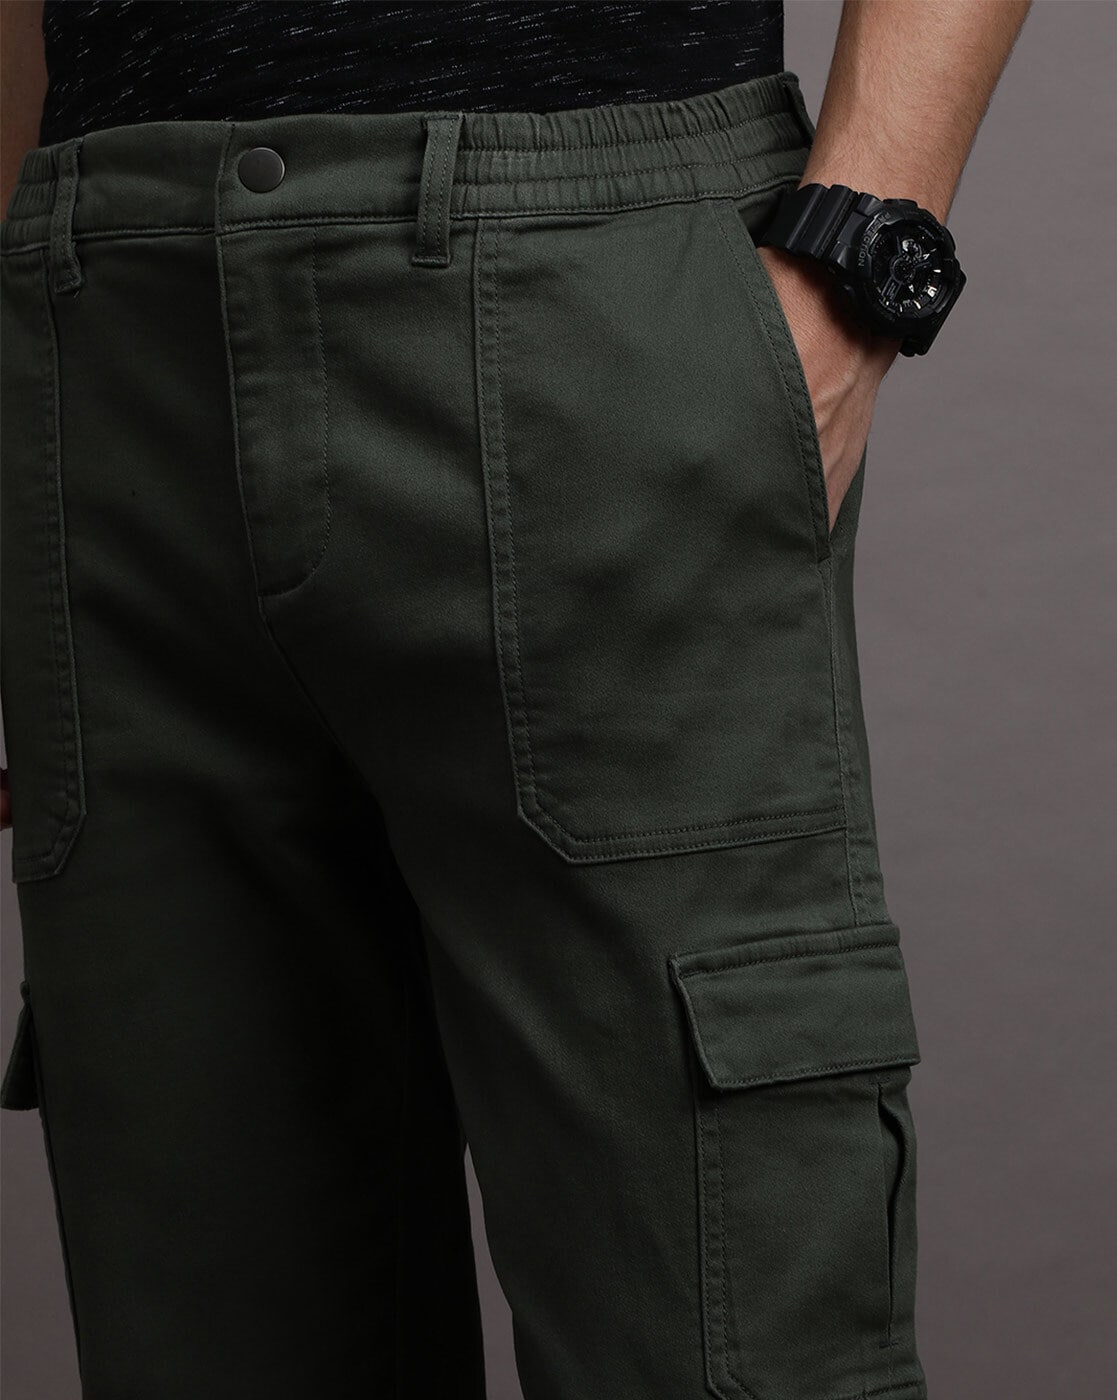 Crocodile Green Cargo Pants for Men